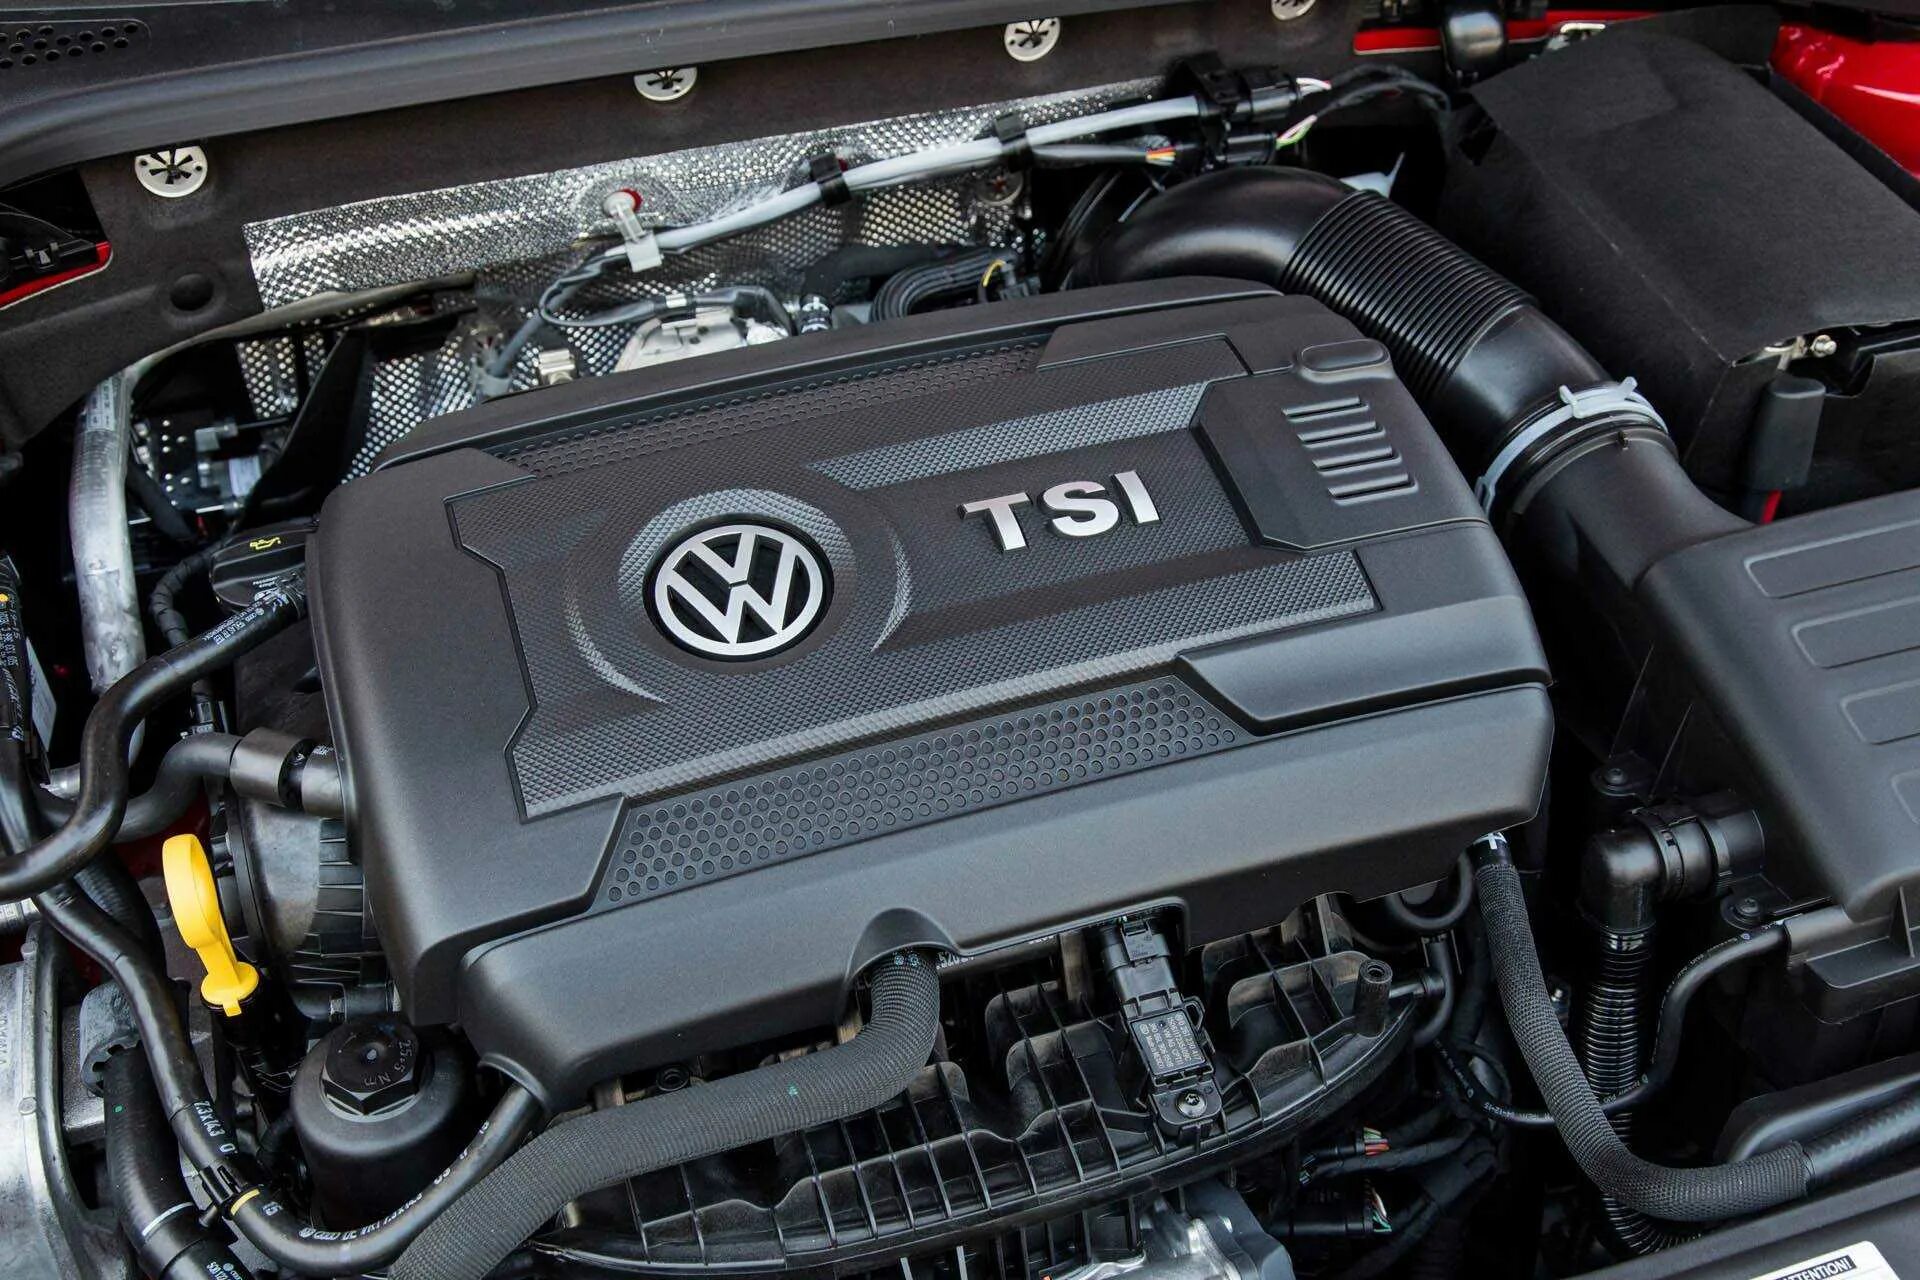 Двигатель Volkswagen Tiguan 2.0 TSI. Двигатель Volkswagen TSI 2.0. Двигатель Volkswagen Tiguan 1.4 TSI. Двигатель VW Tiguan TSI 2.0.